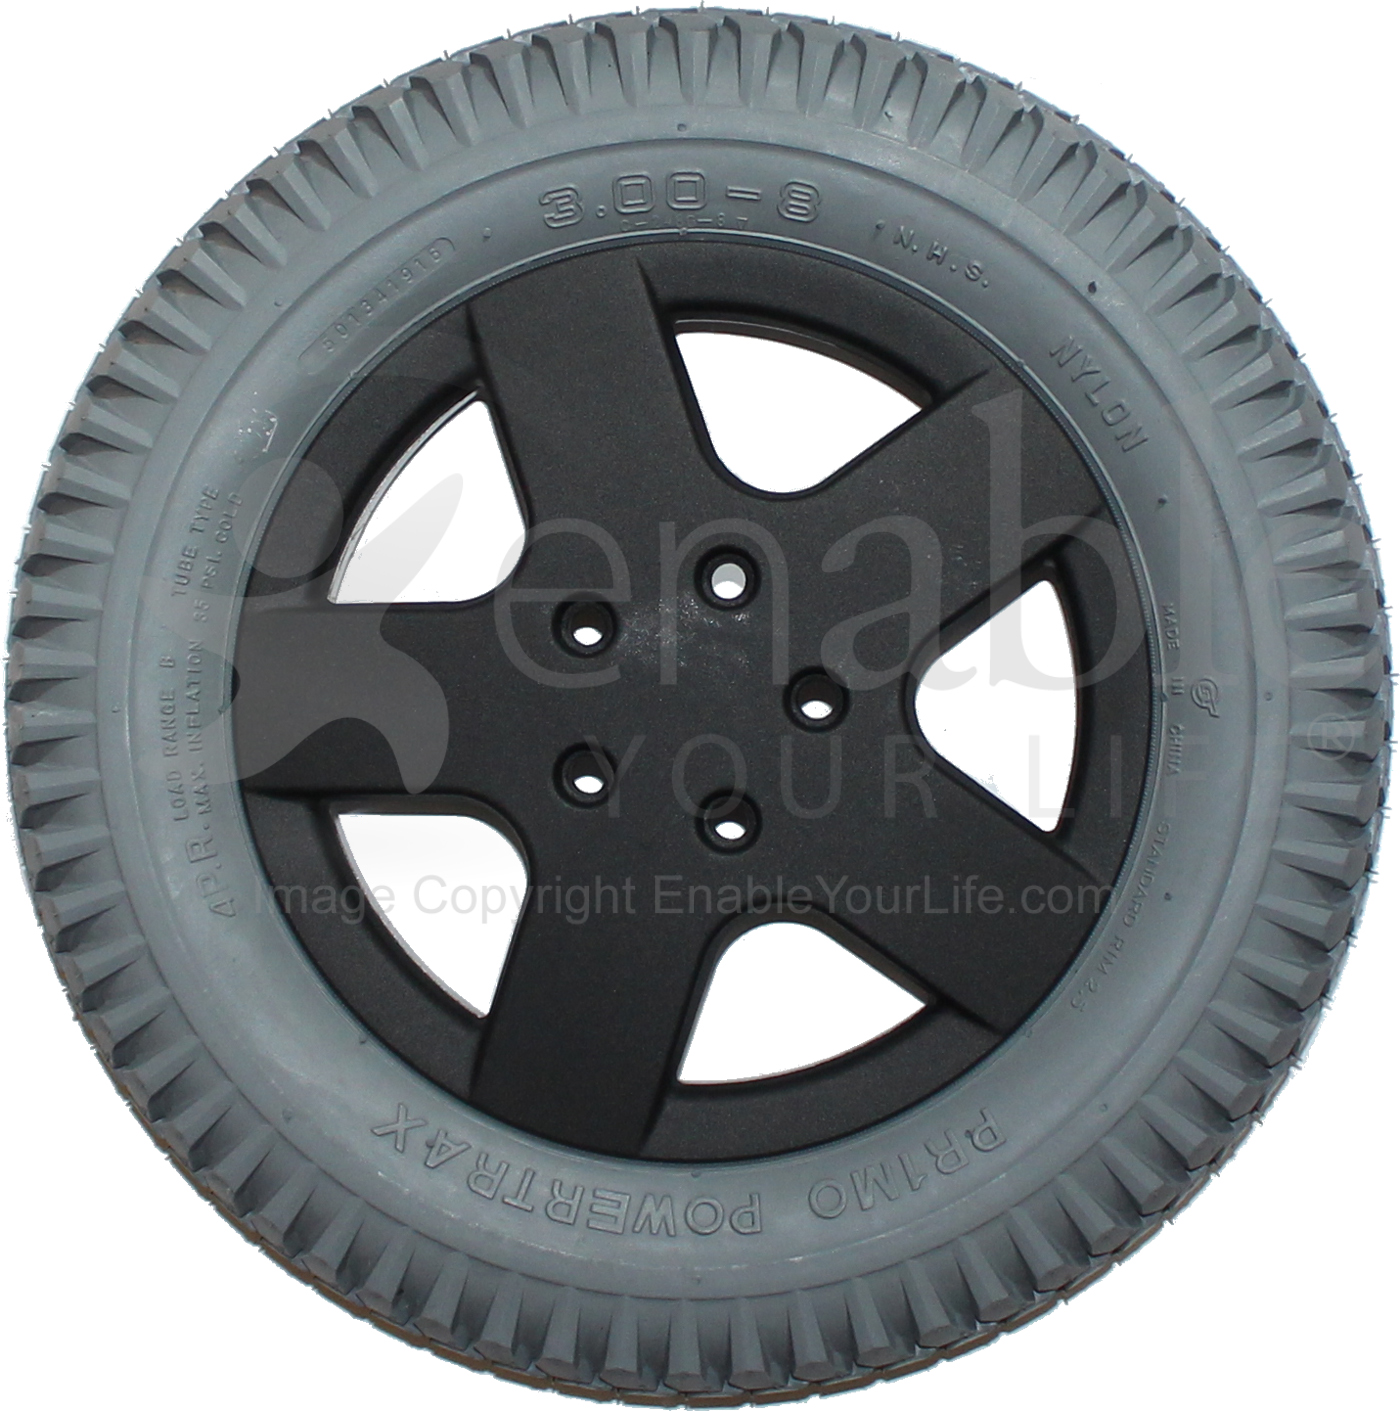 Primo 14x3 (3.00-8) Foam Filled, Black, Power Wheelchair Tire